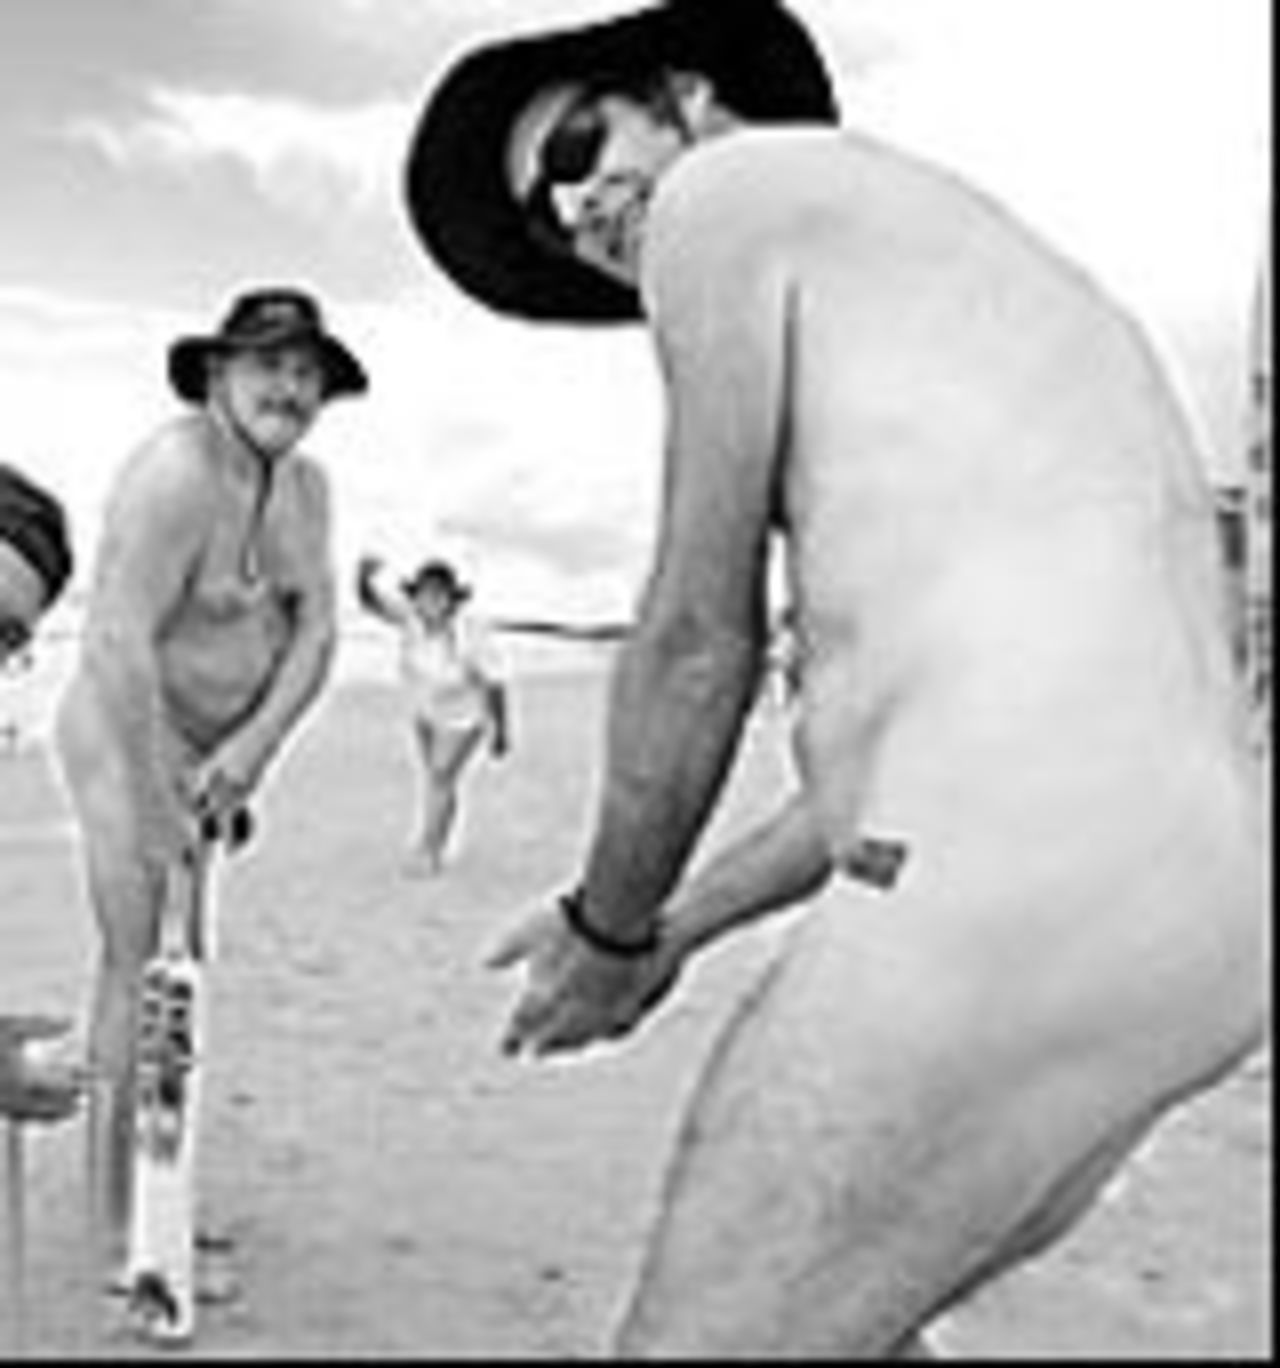 Nude cricketers in Australia